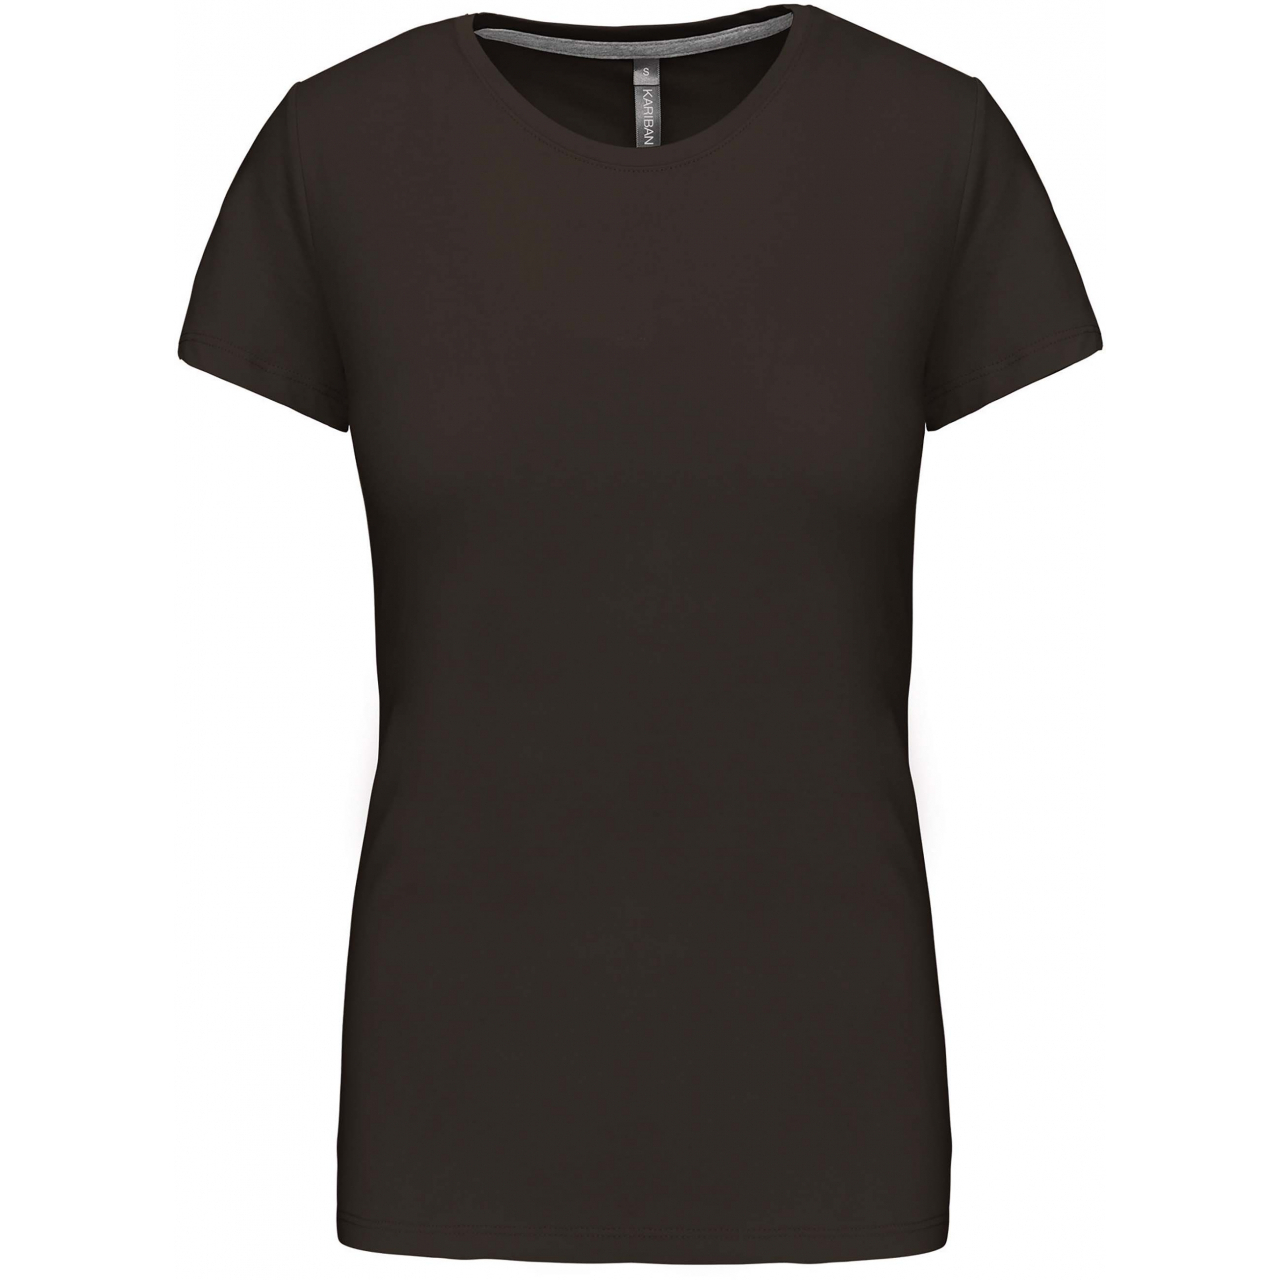 Dámské tričko Kariban s krátkým rukávem - tmavé khaki, M